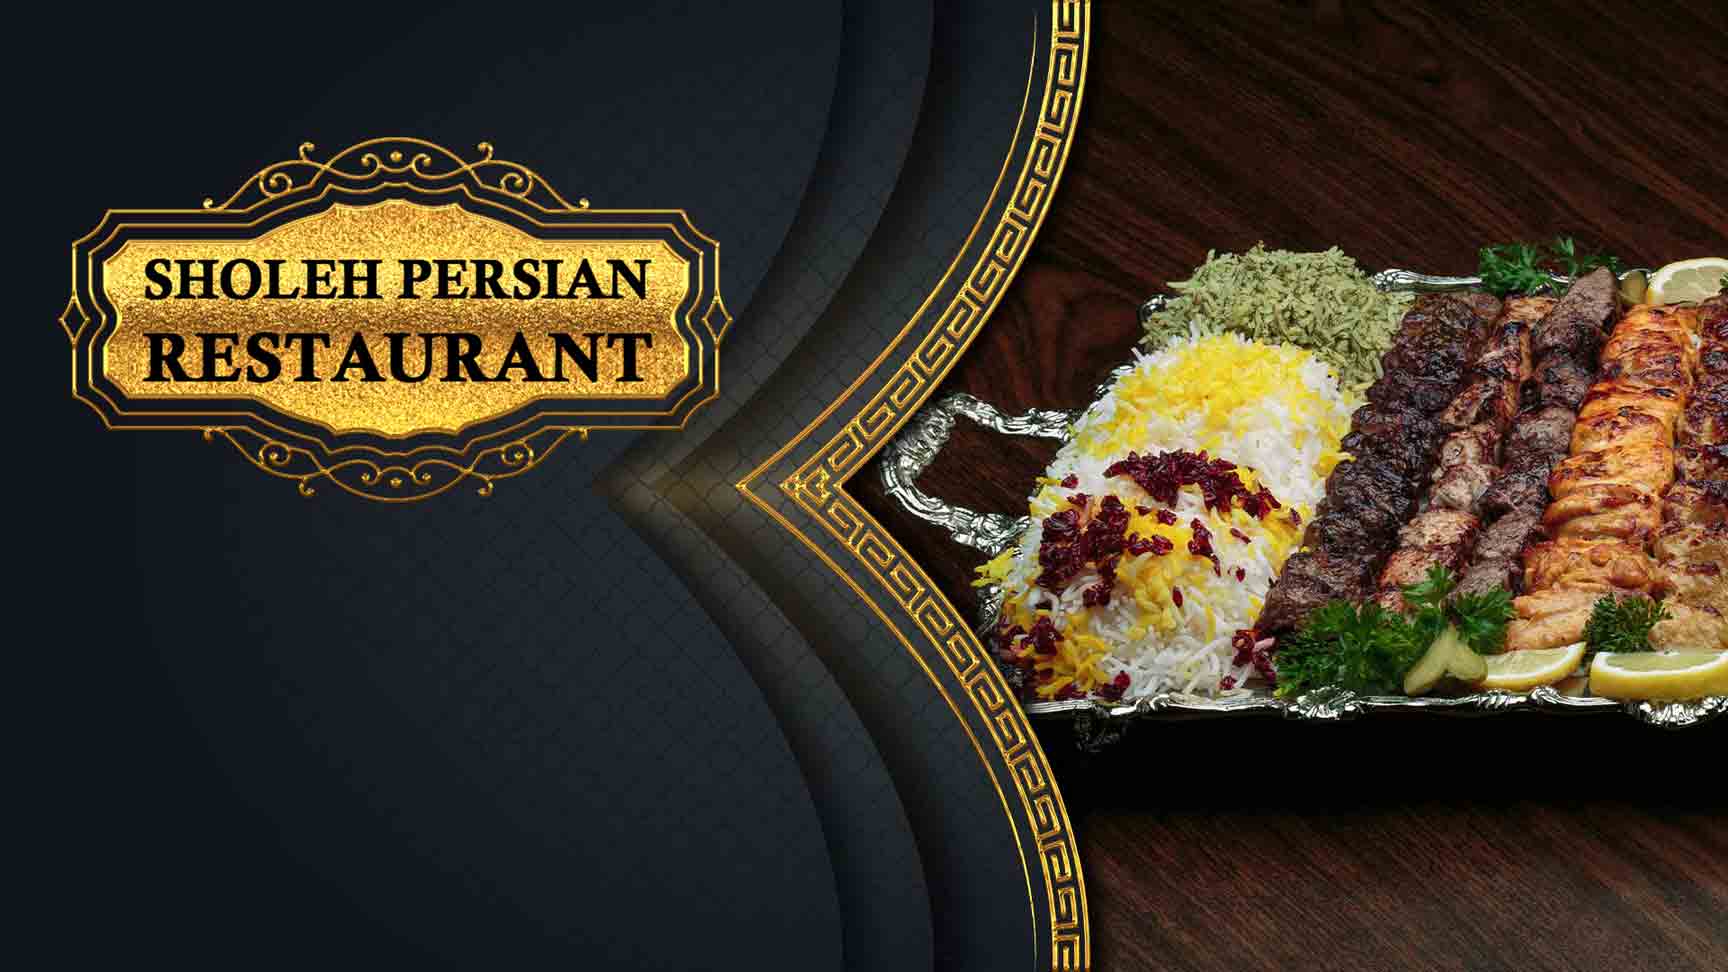  Sholeh Persian restaurant Glasgow 